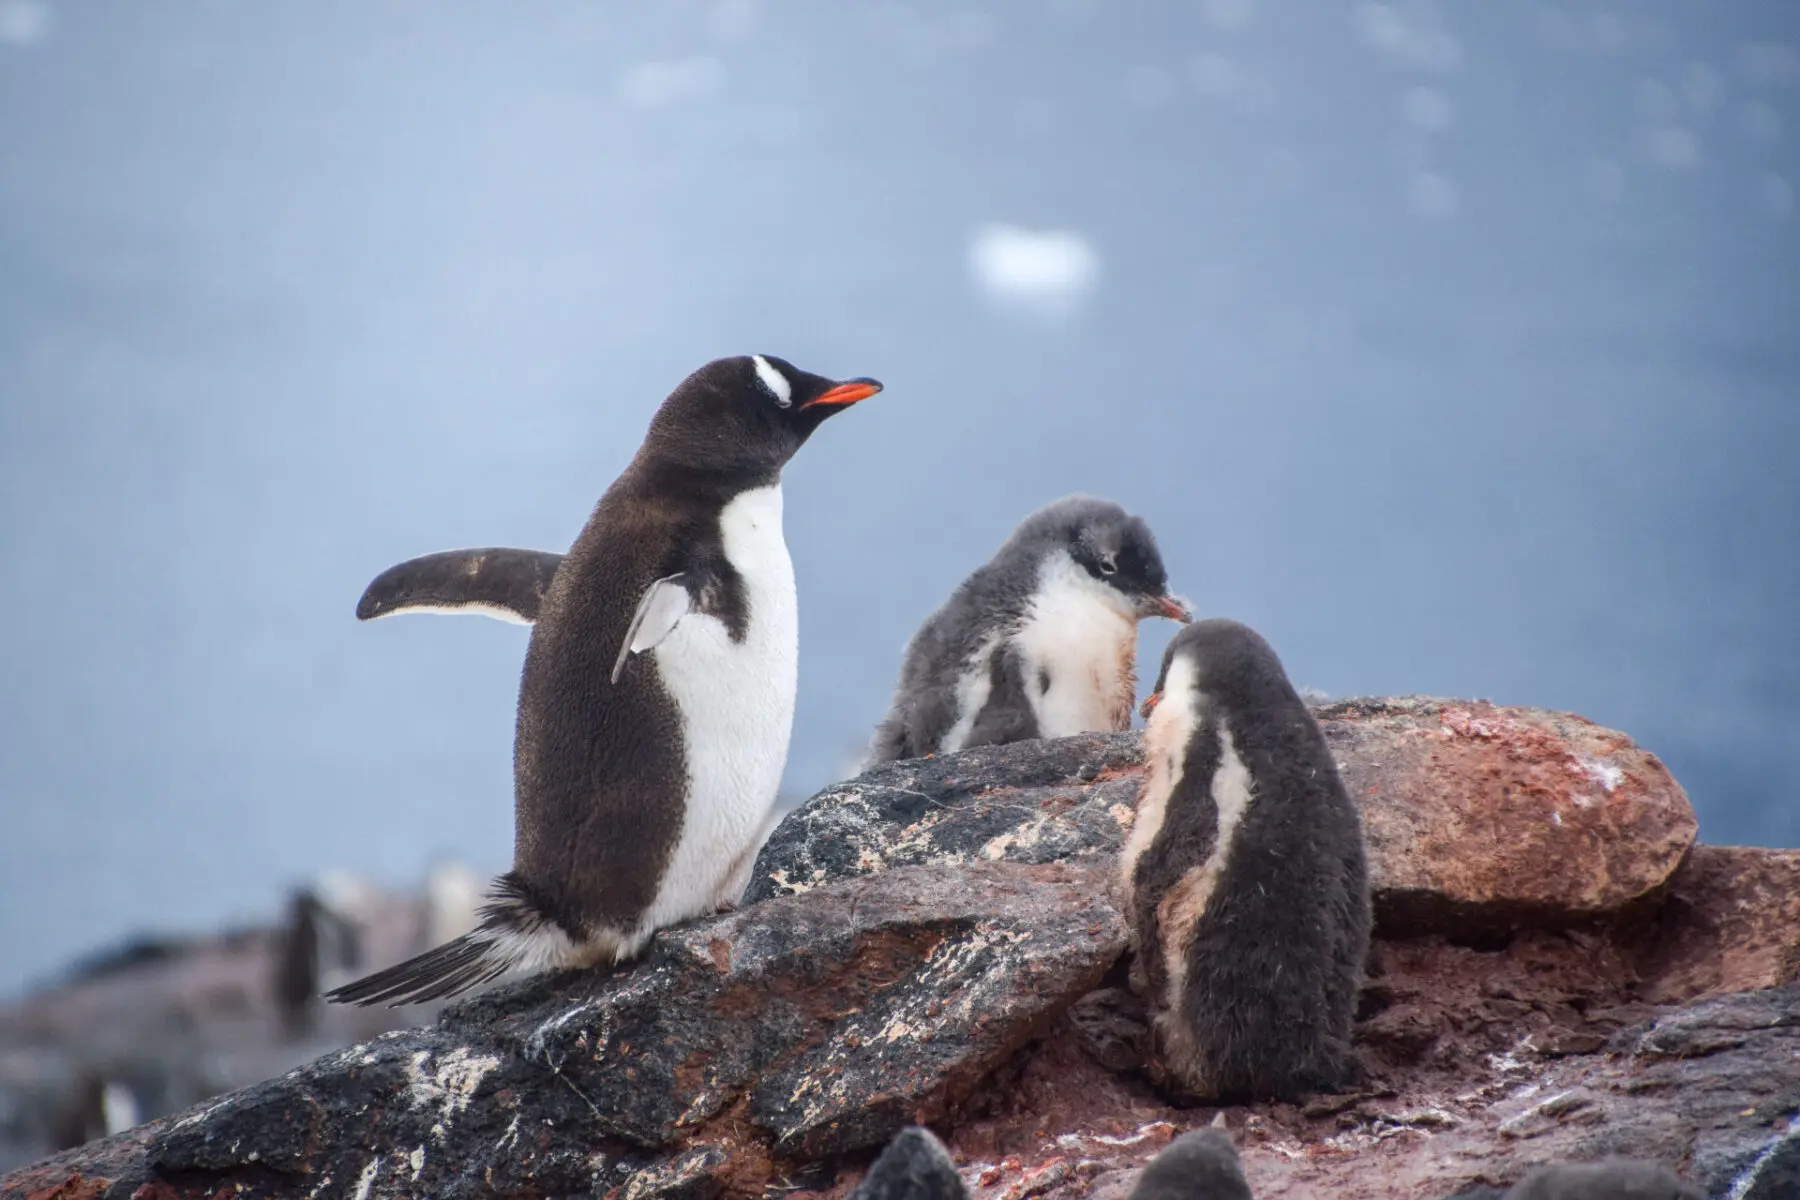 Gentoo penguins in Antarctica - wildlife sightings decrease as you had towards the Antarctic Circle